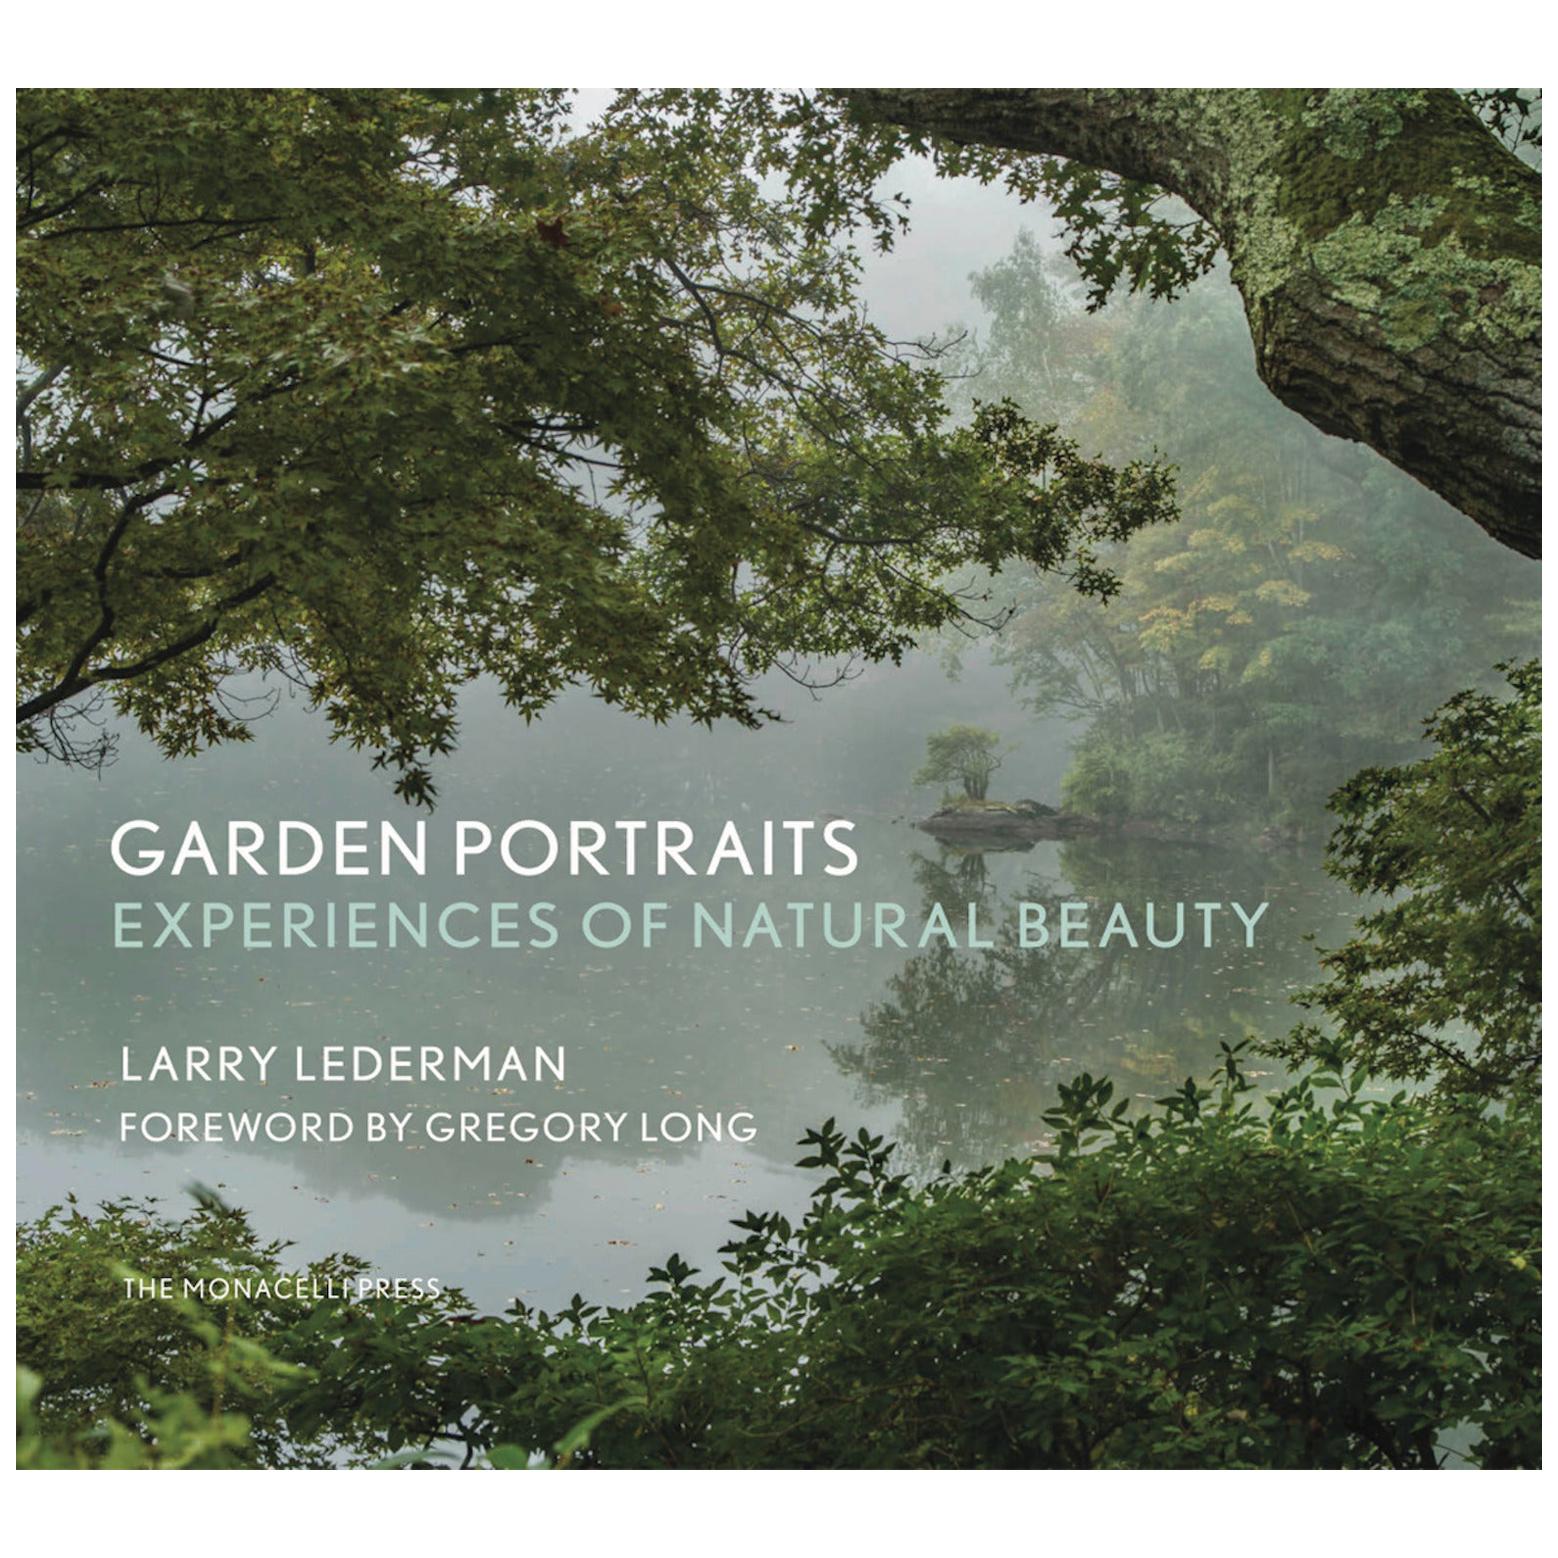 Portraits de jardin « Experiences of Natural Beauty »